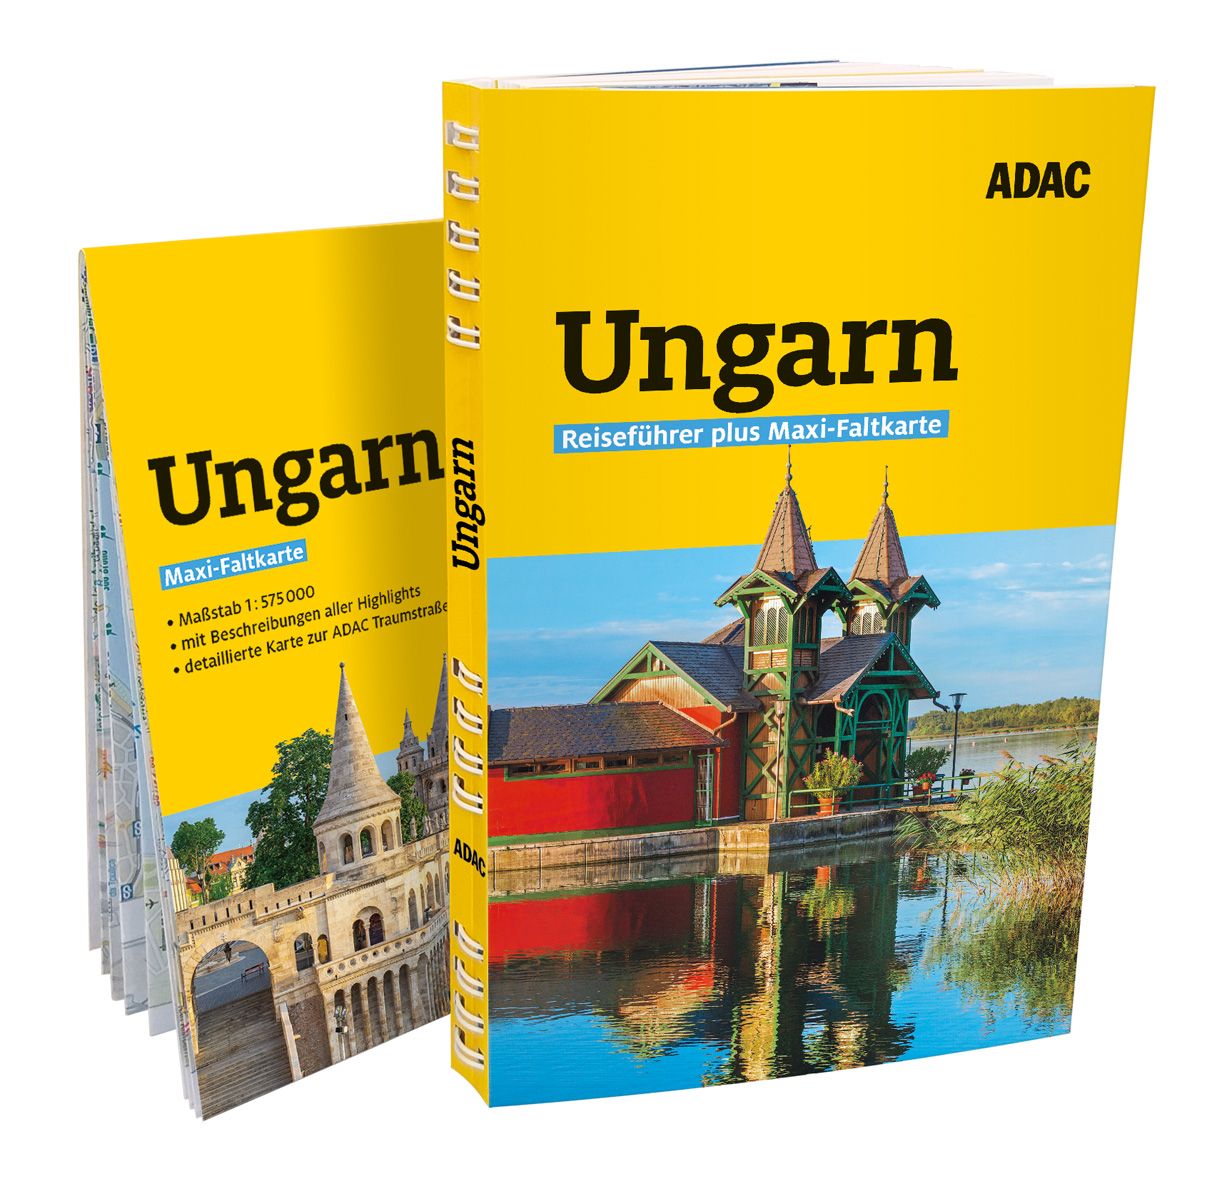 Online bestellen: Reisgids Ungarn - Hongarije Reiseführer plus | ADAC